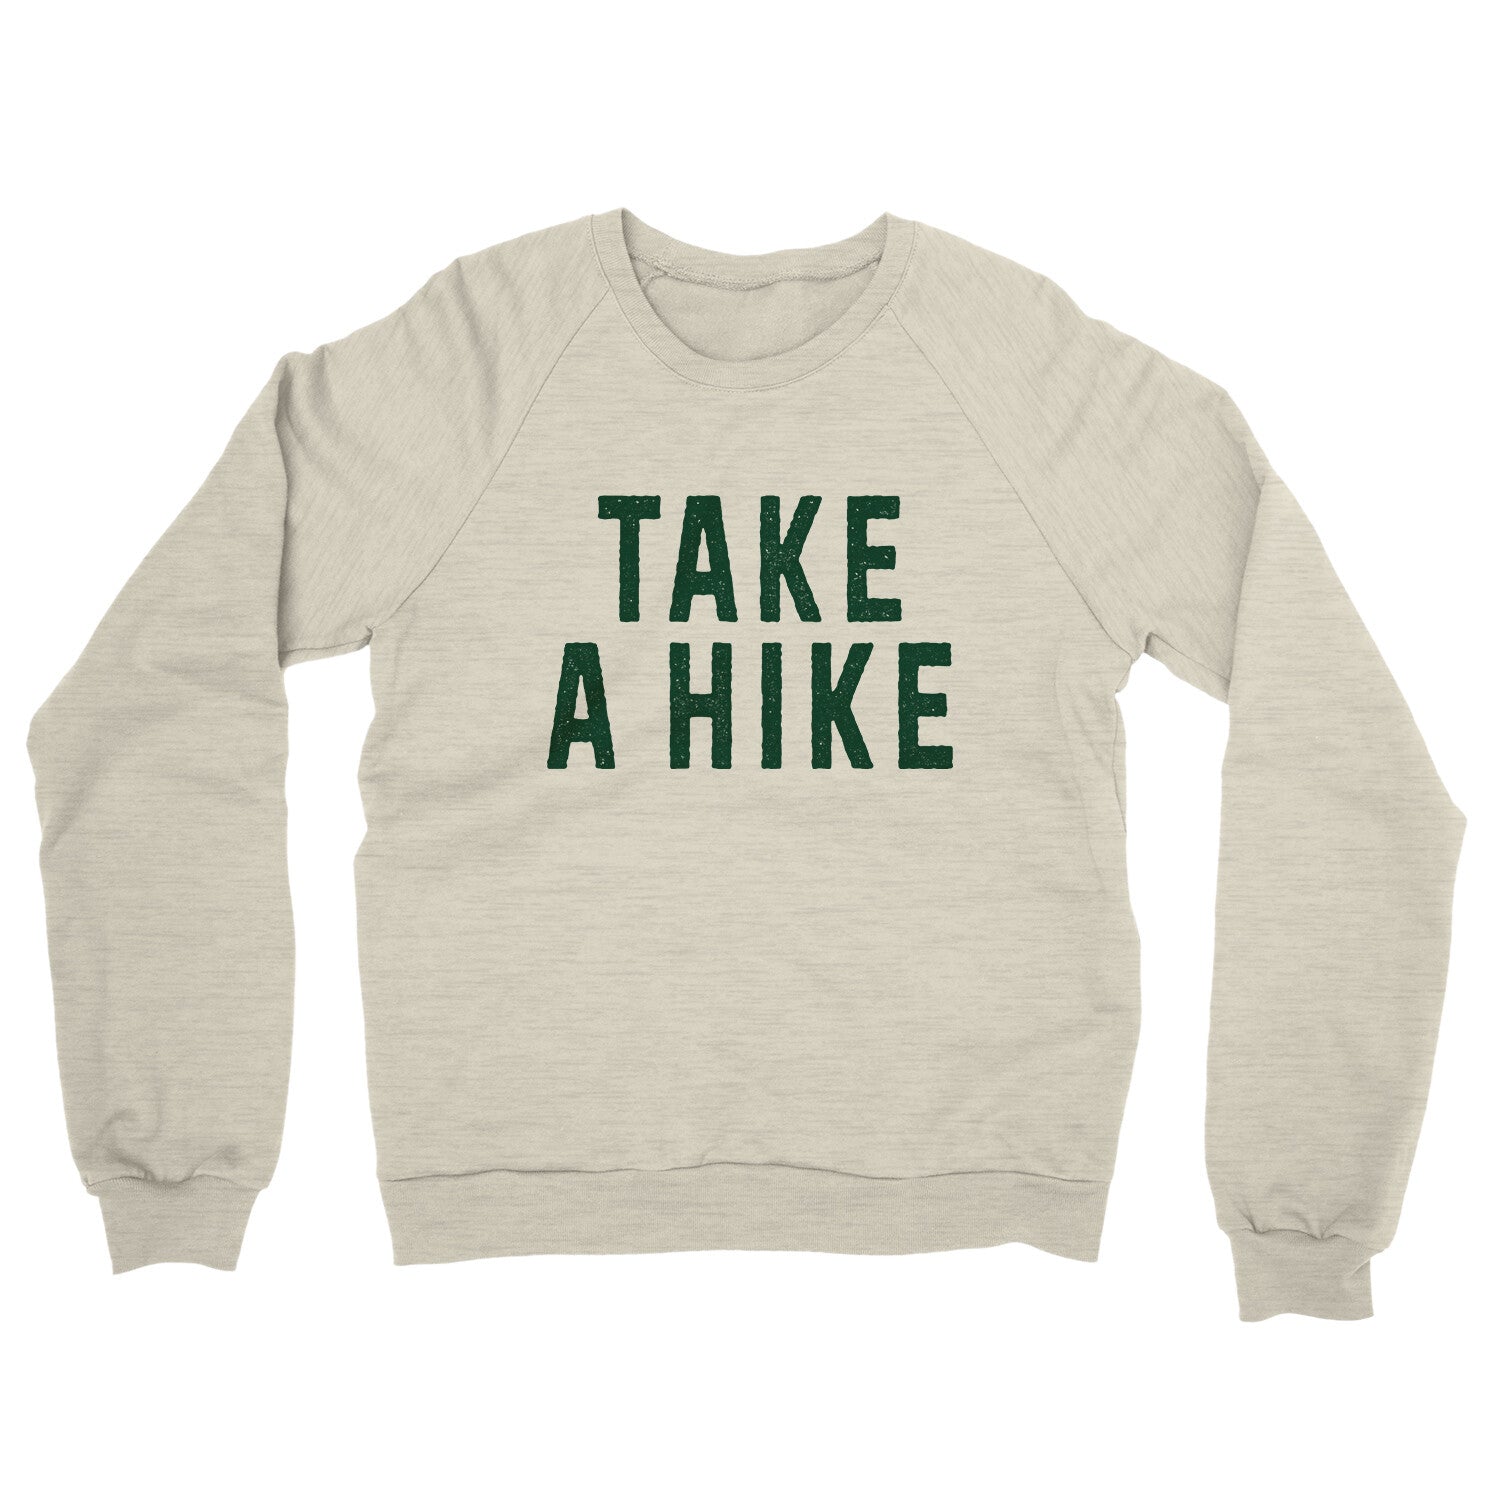 Take a Hike in Heather Oatmeal Color